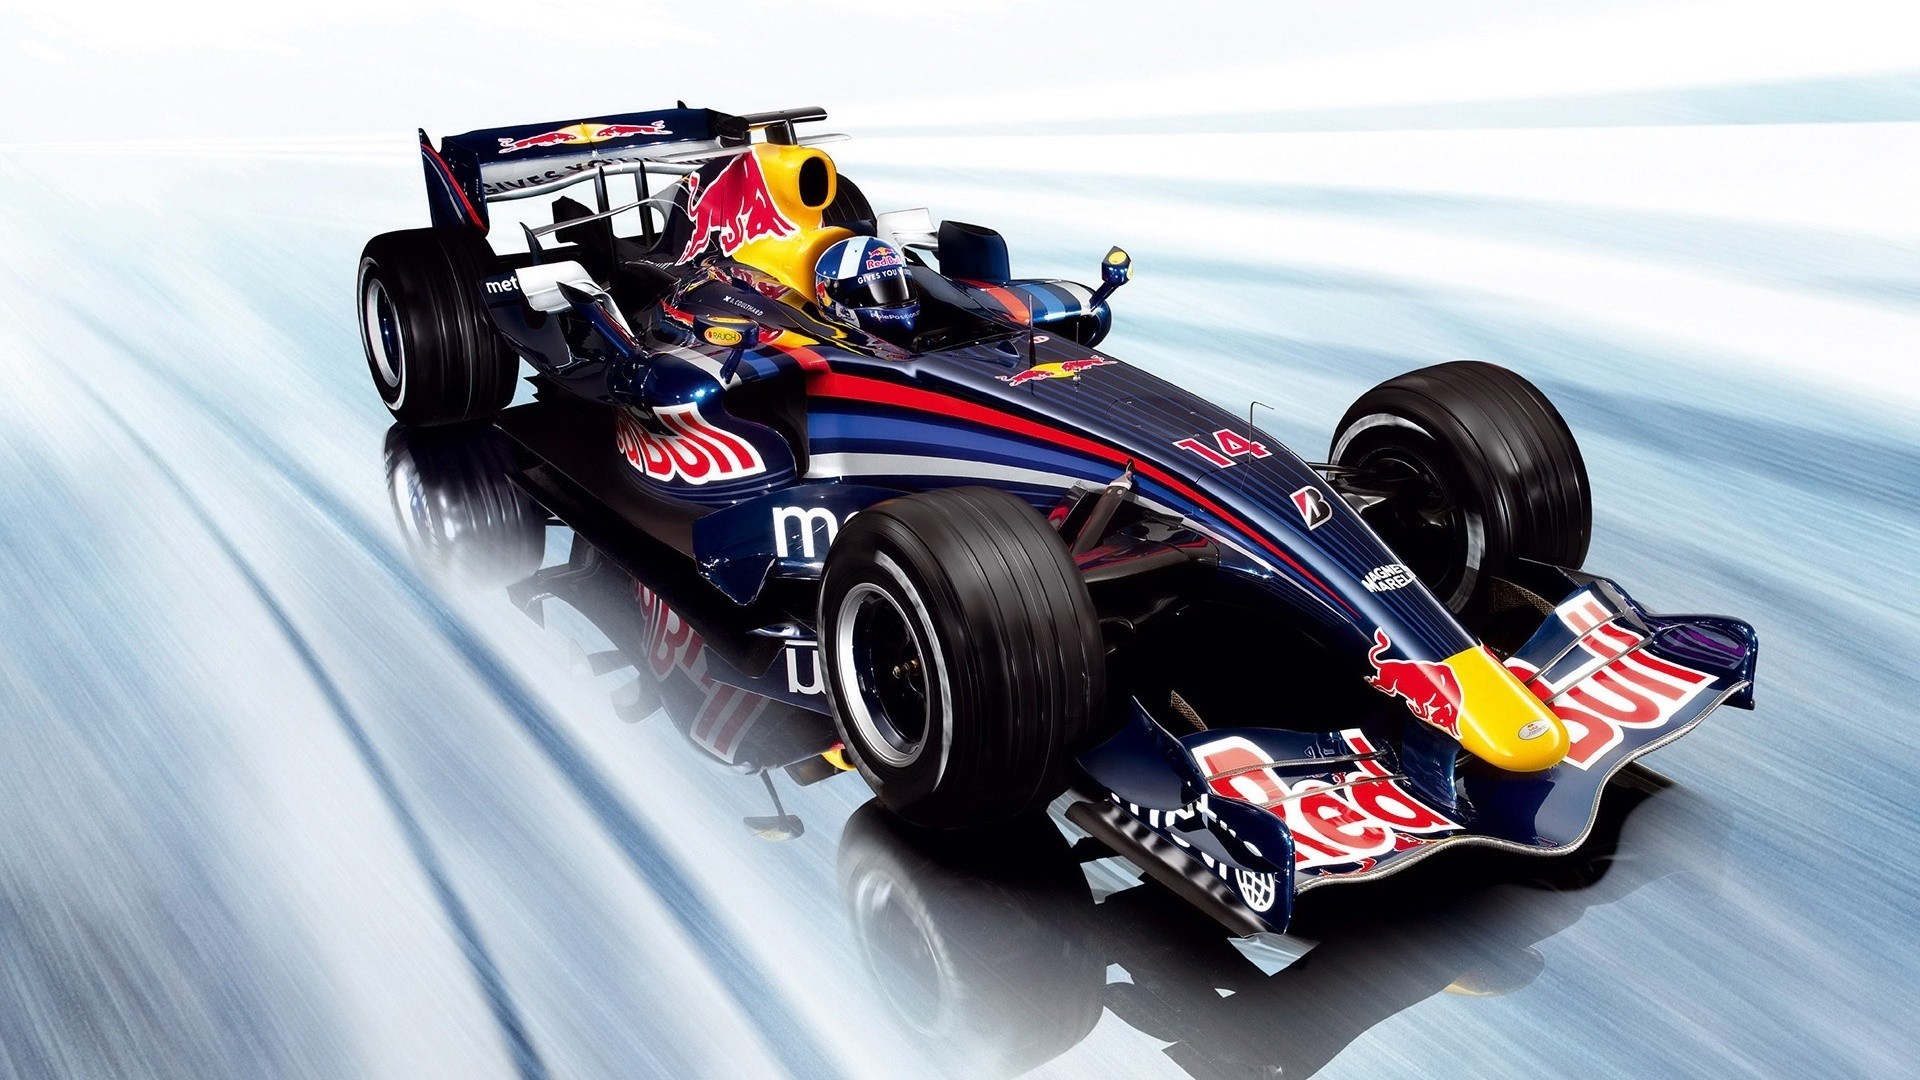 General 1920x1080 Formula 1 Red Bull Racing car vehicle race cars racing motorsport livery